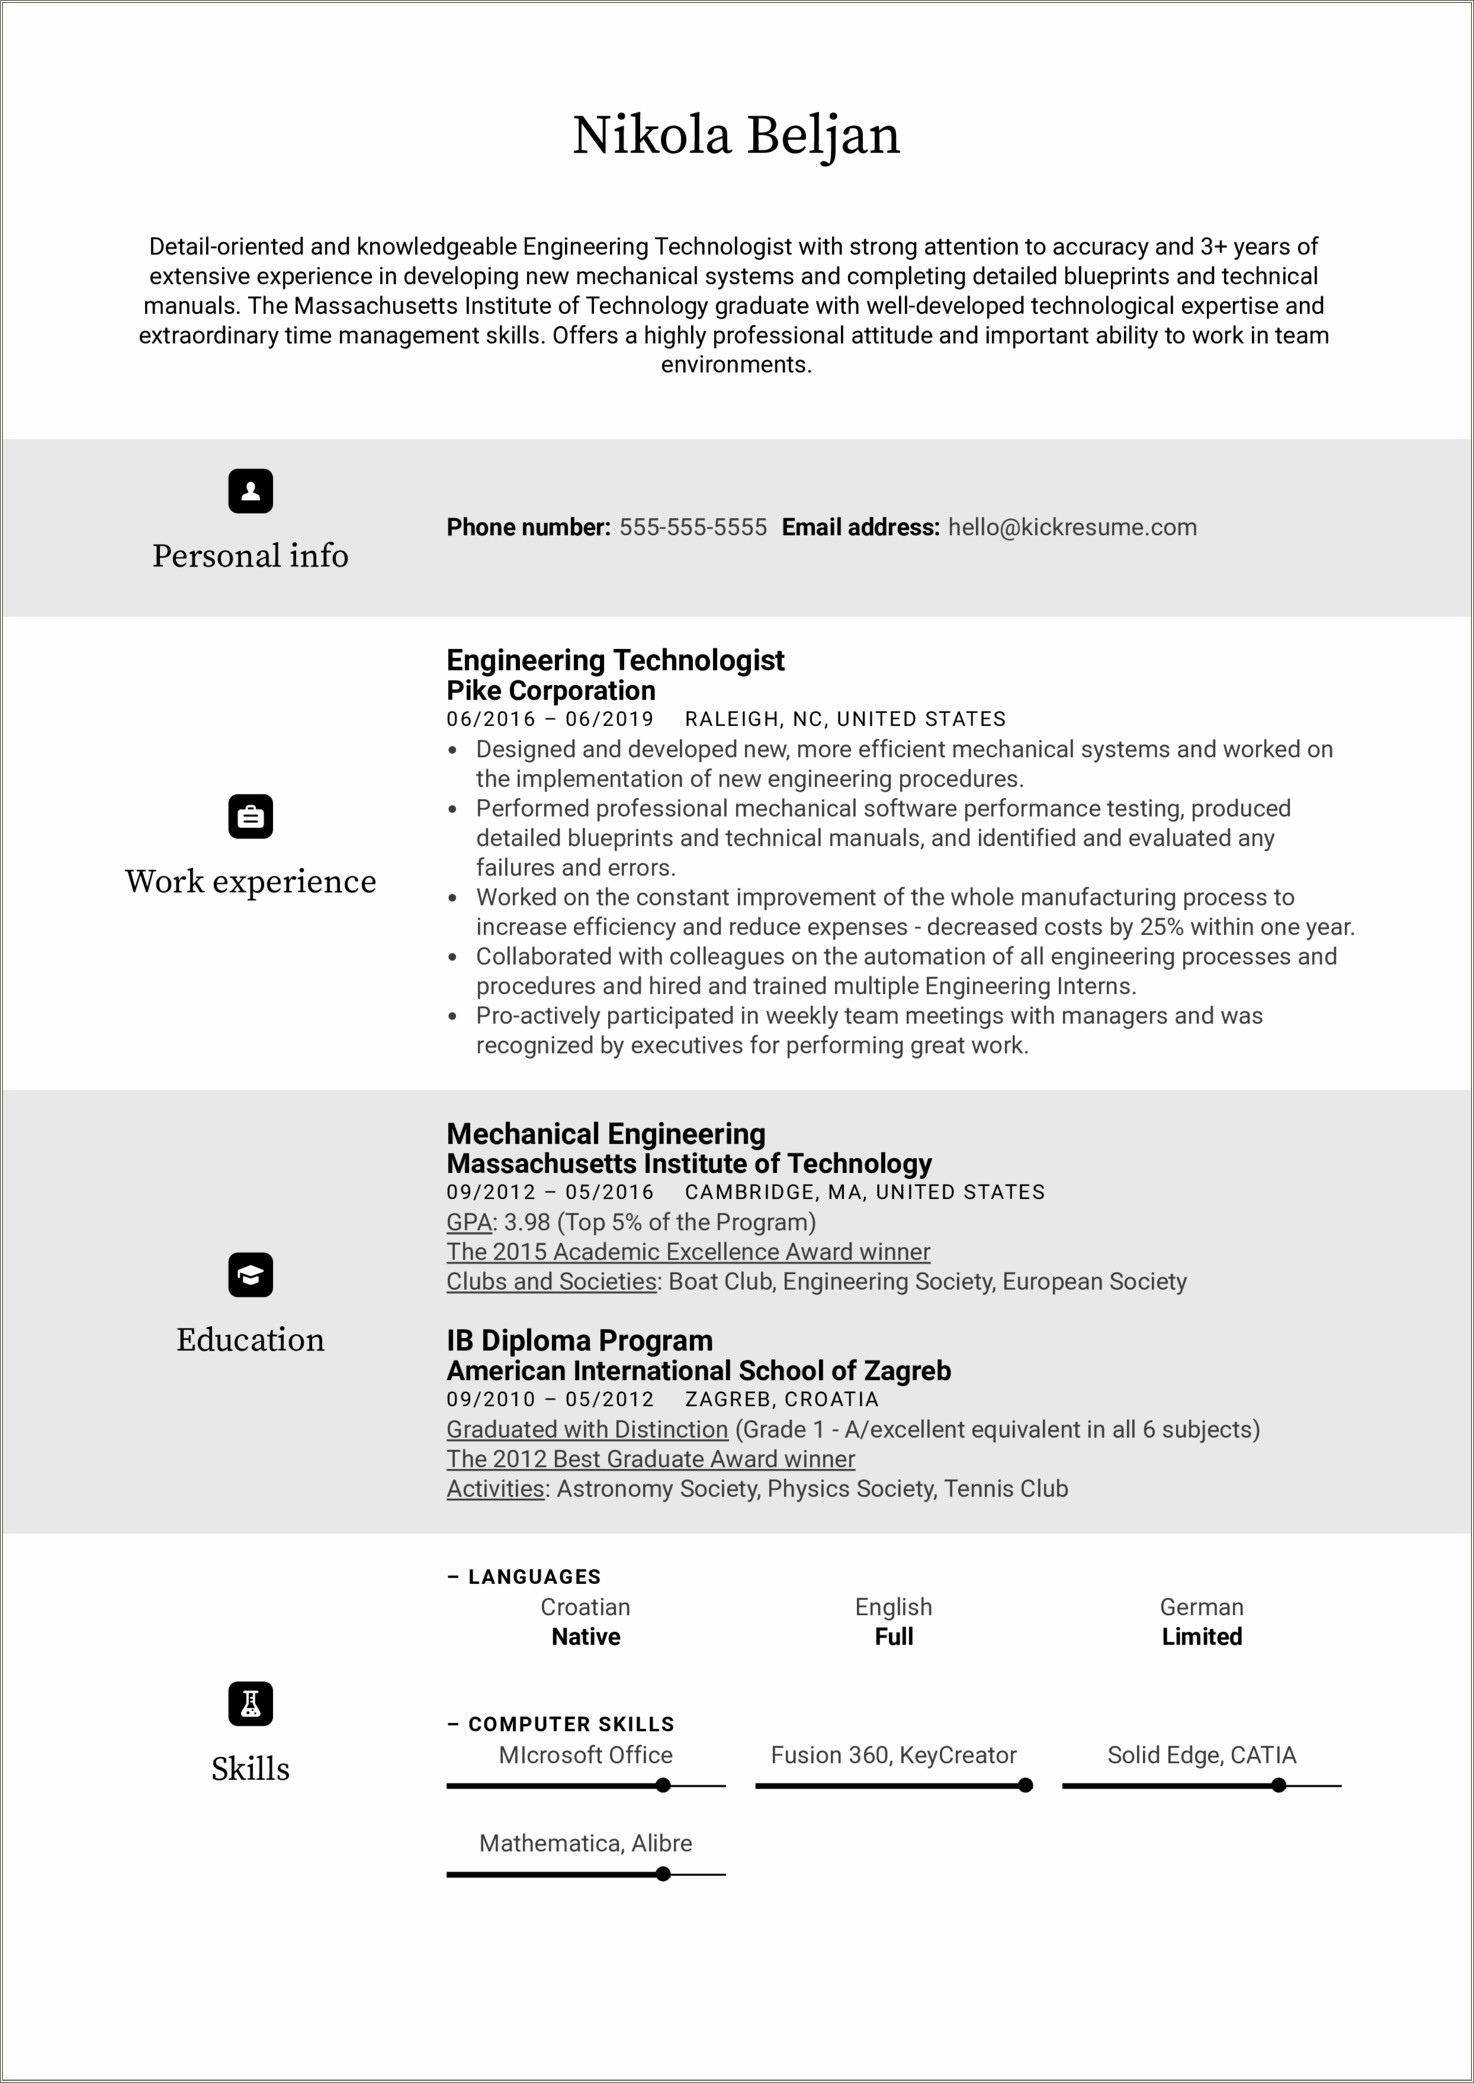 Professional Resume Examples For Graduate School